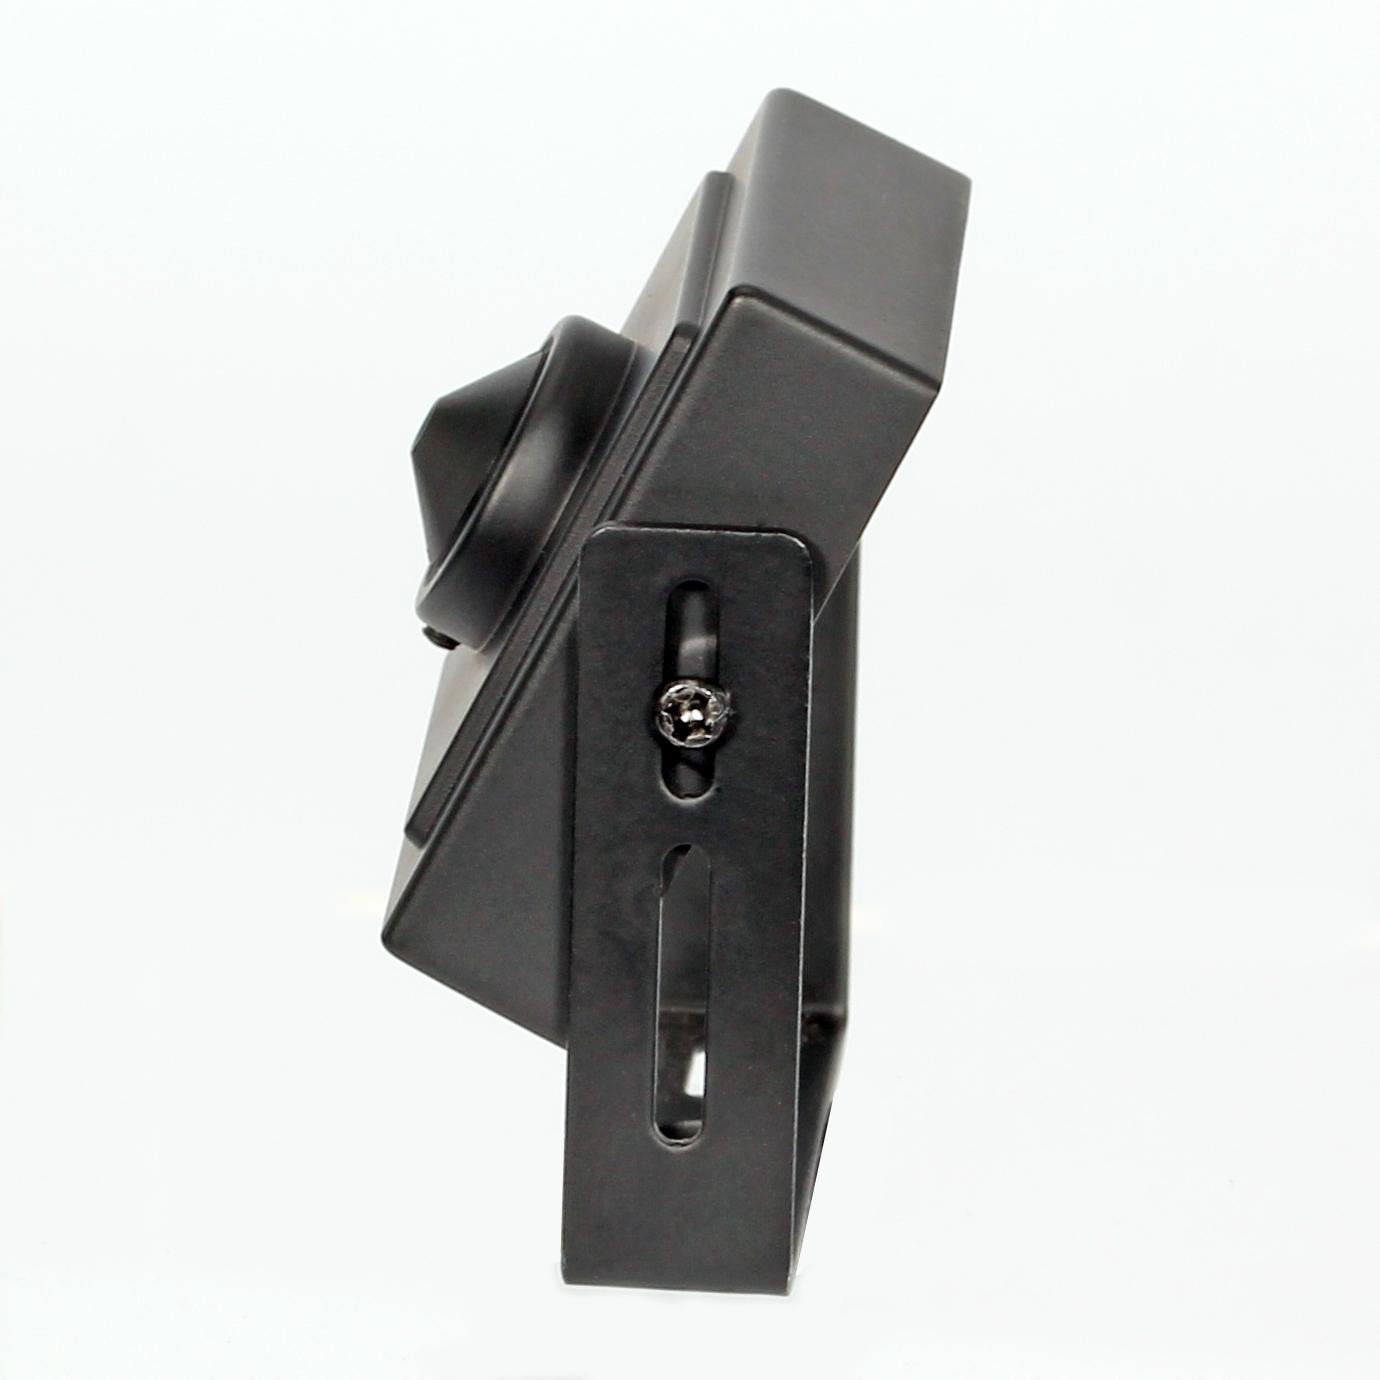 2016 D-VITEC CCTV Surveillance ATM Camera 1.3MP USB Color Pinhole Mini CAMERA